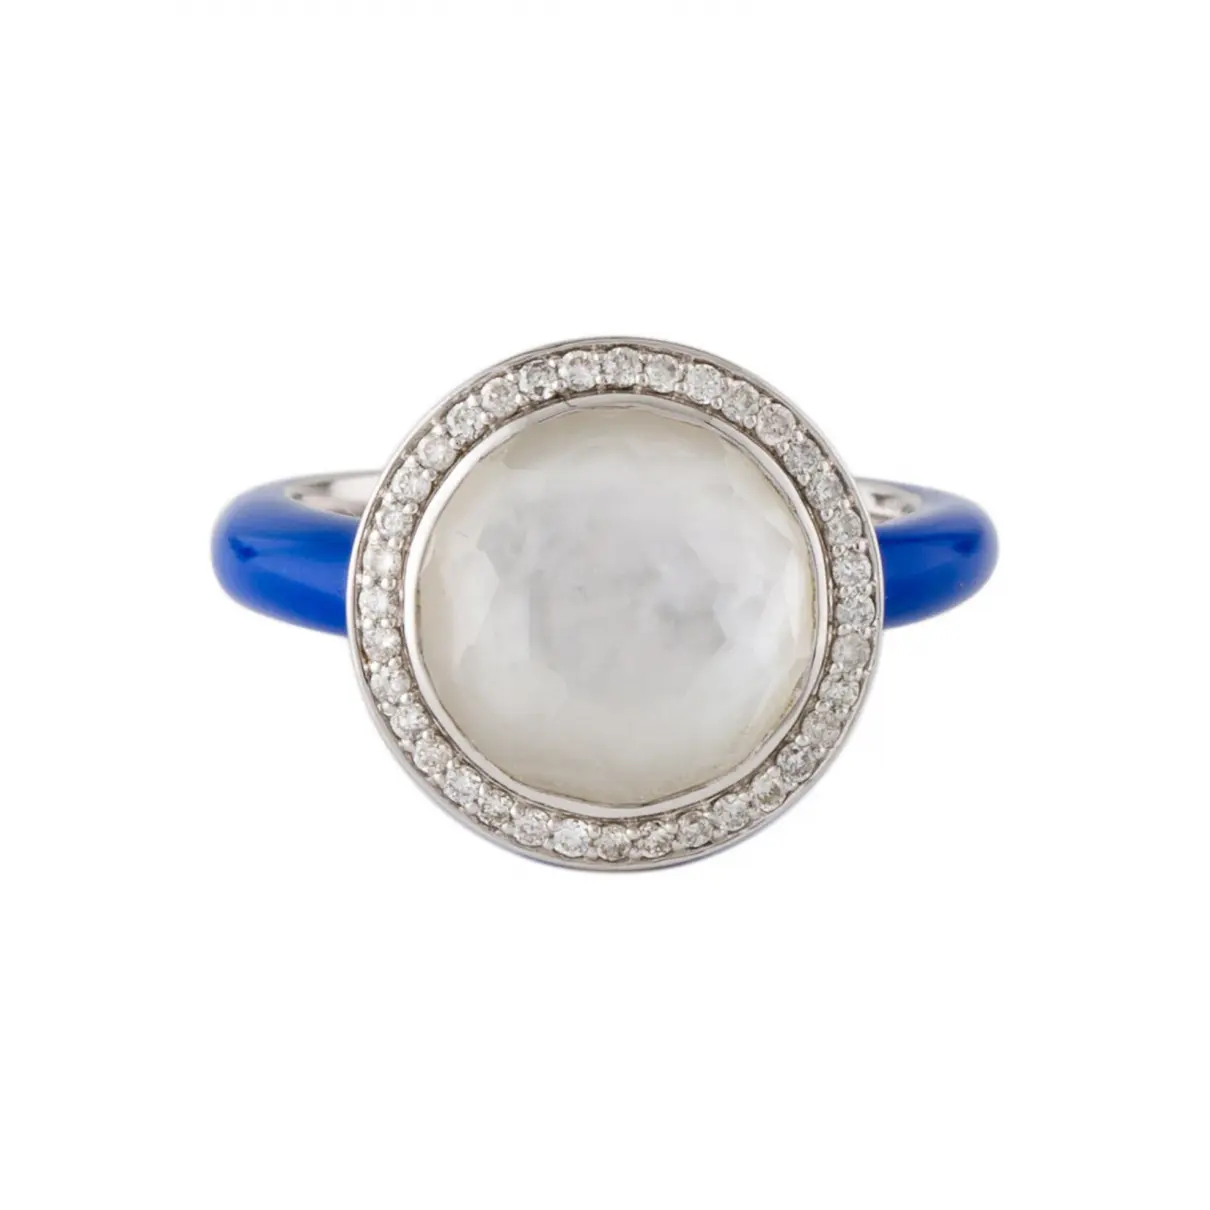 Buy Ippolita Silver ring online